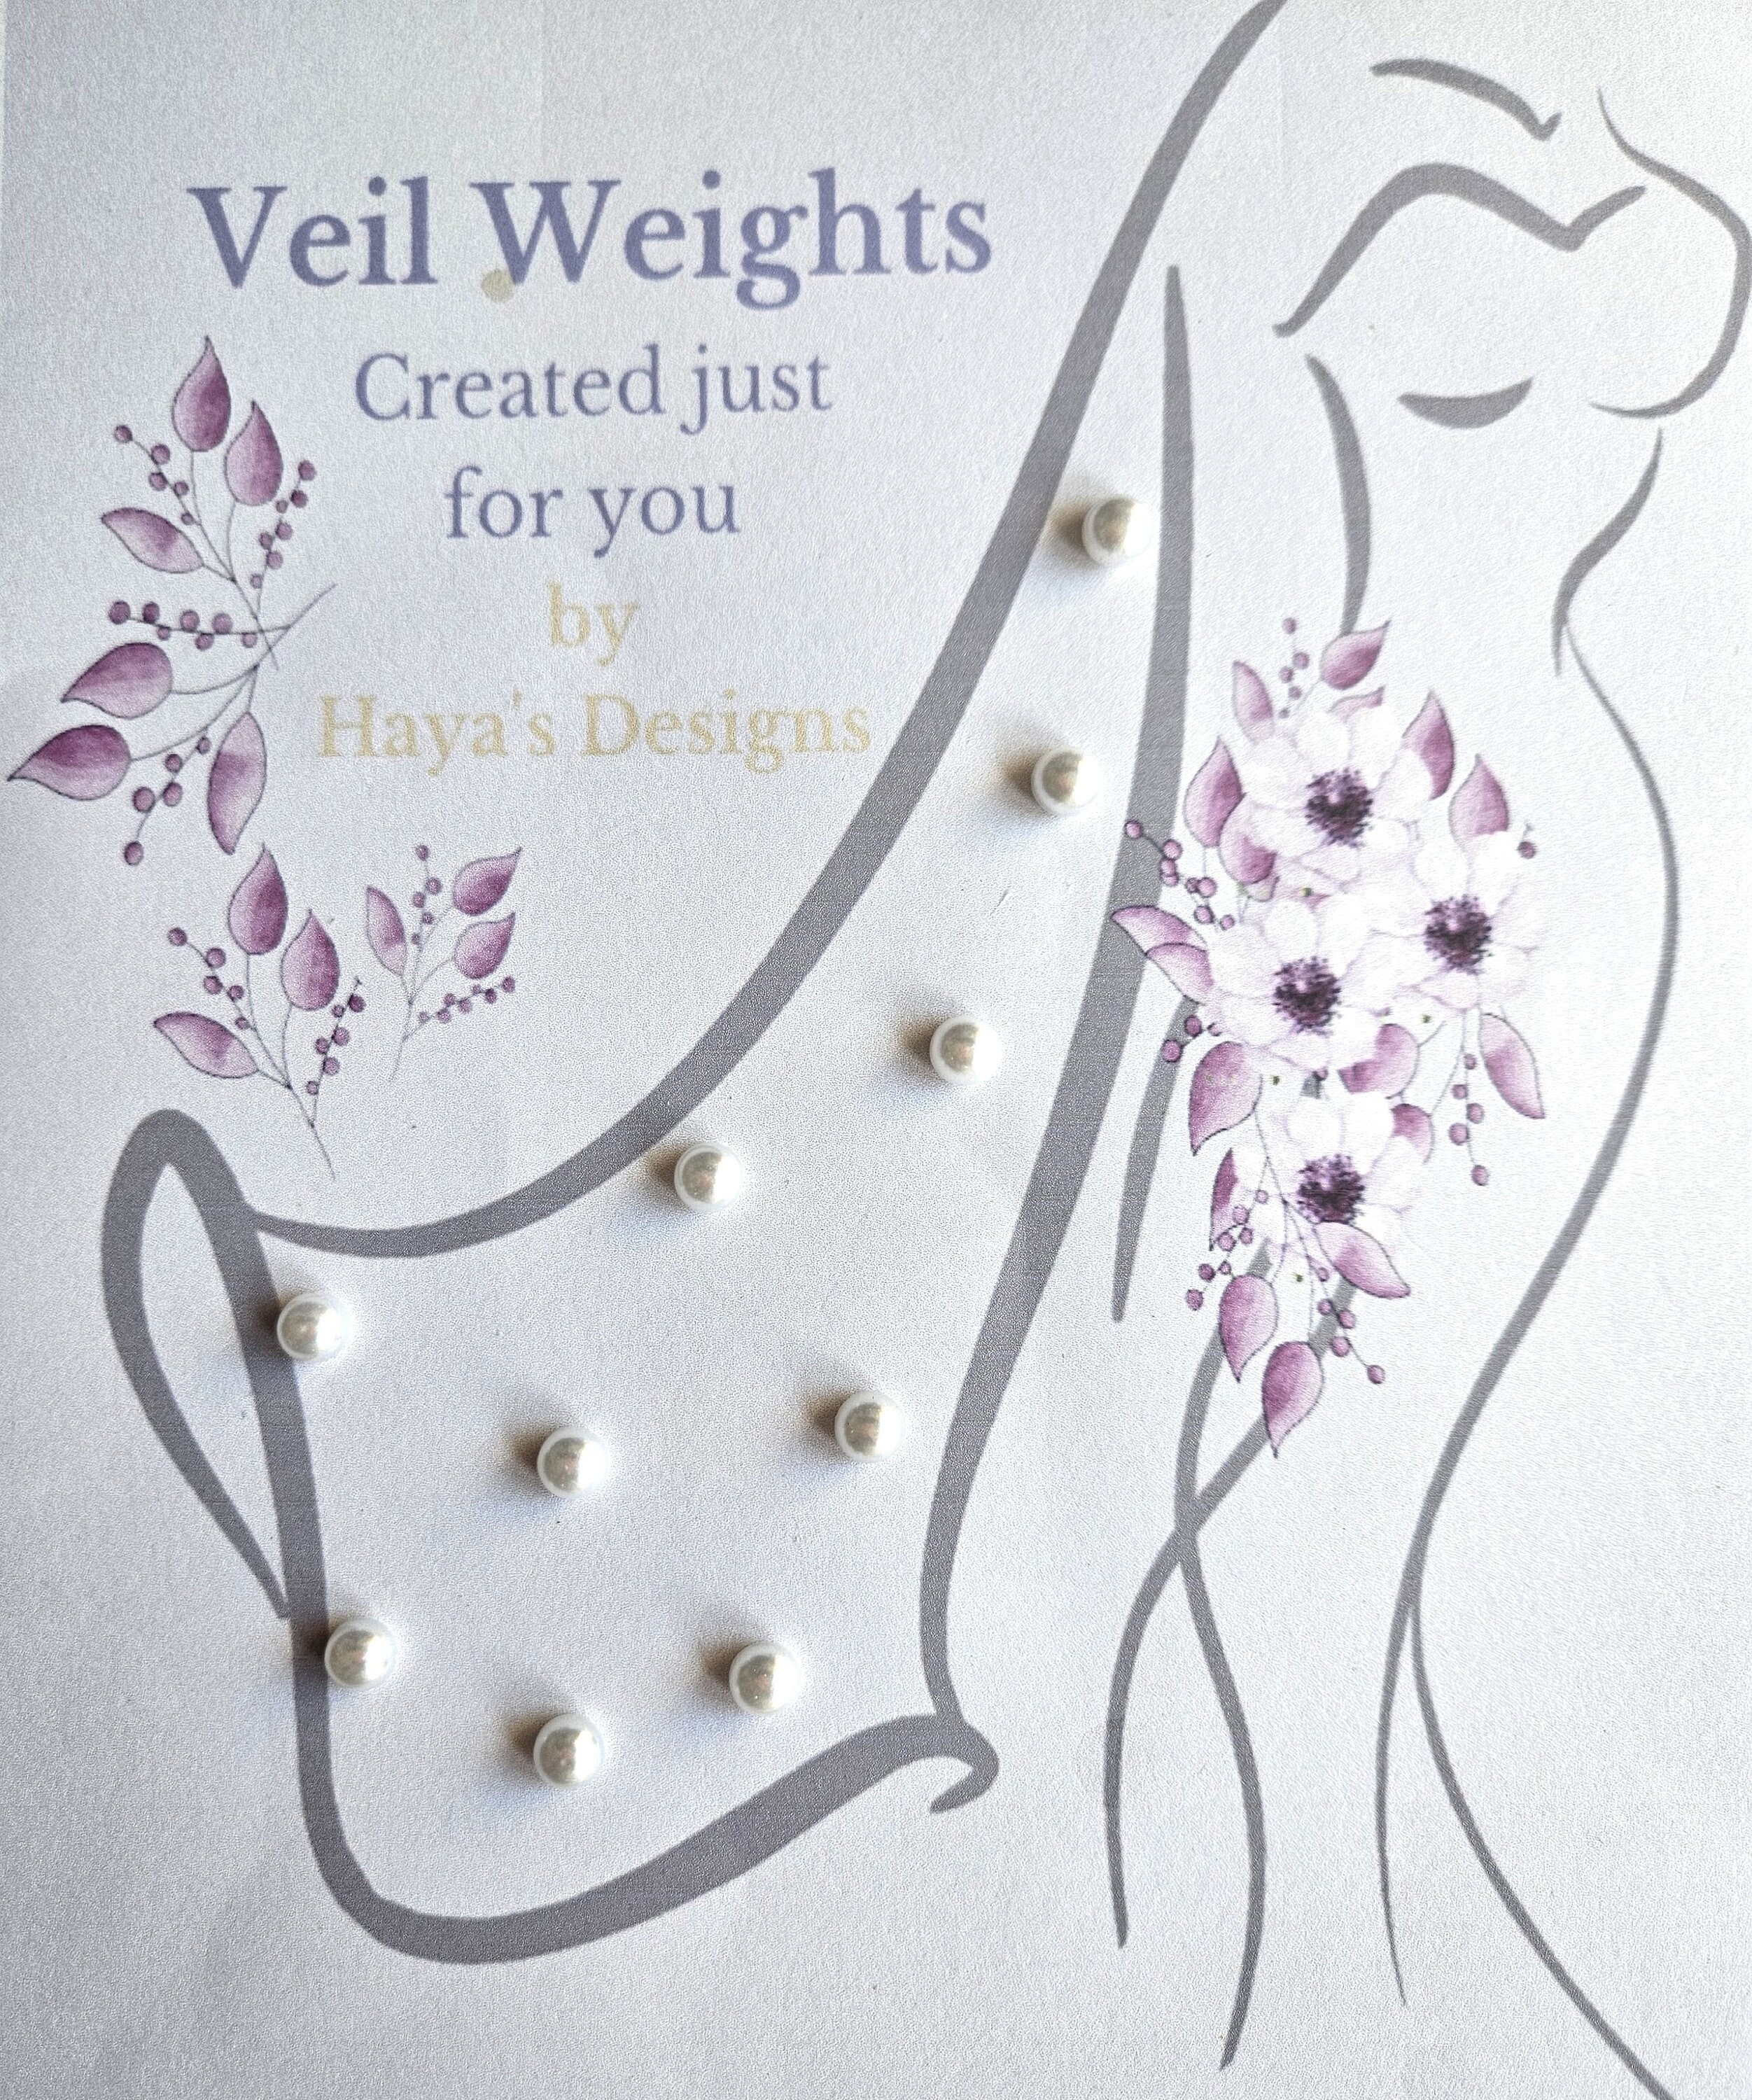 AccessoriesByHayas Veil Weights, Silver Druzy Style Veil Weight, Bridal, Elegant, Wedding, Wedding Veil, Wedding Party, Bride, Bling, Double Sided Set of 10*